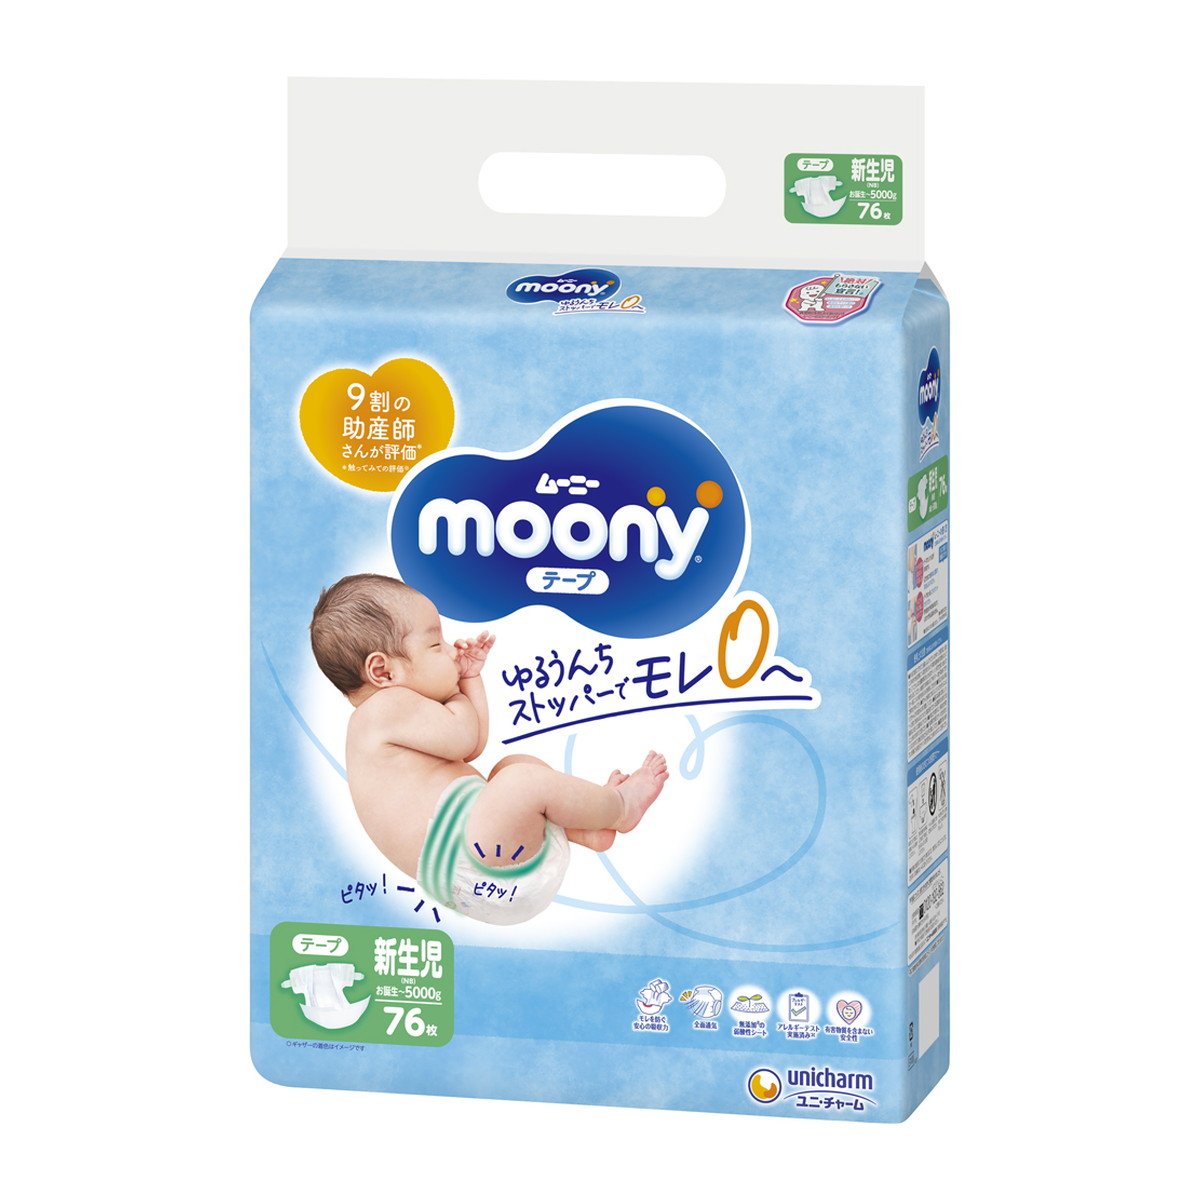 unicharm ムーニー（テープタイプ） 新生児サイズ 76x1パック moony 紙おむつの商品画像